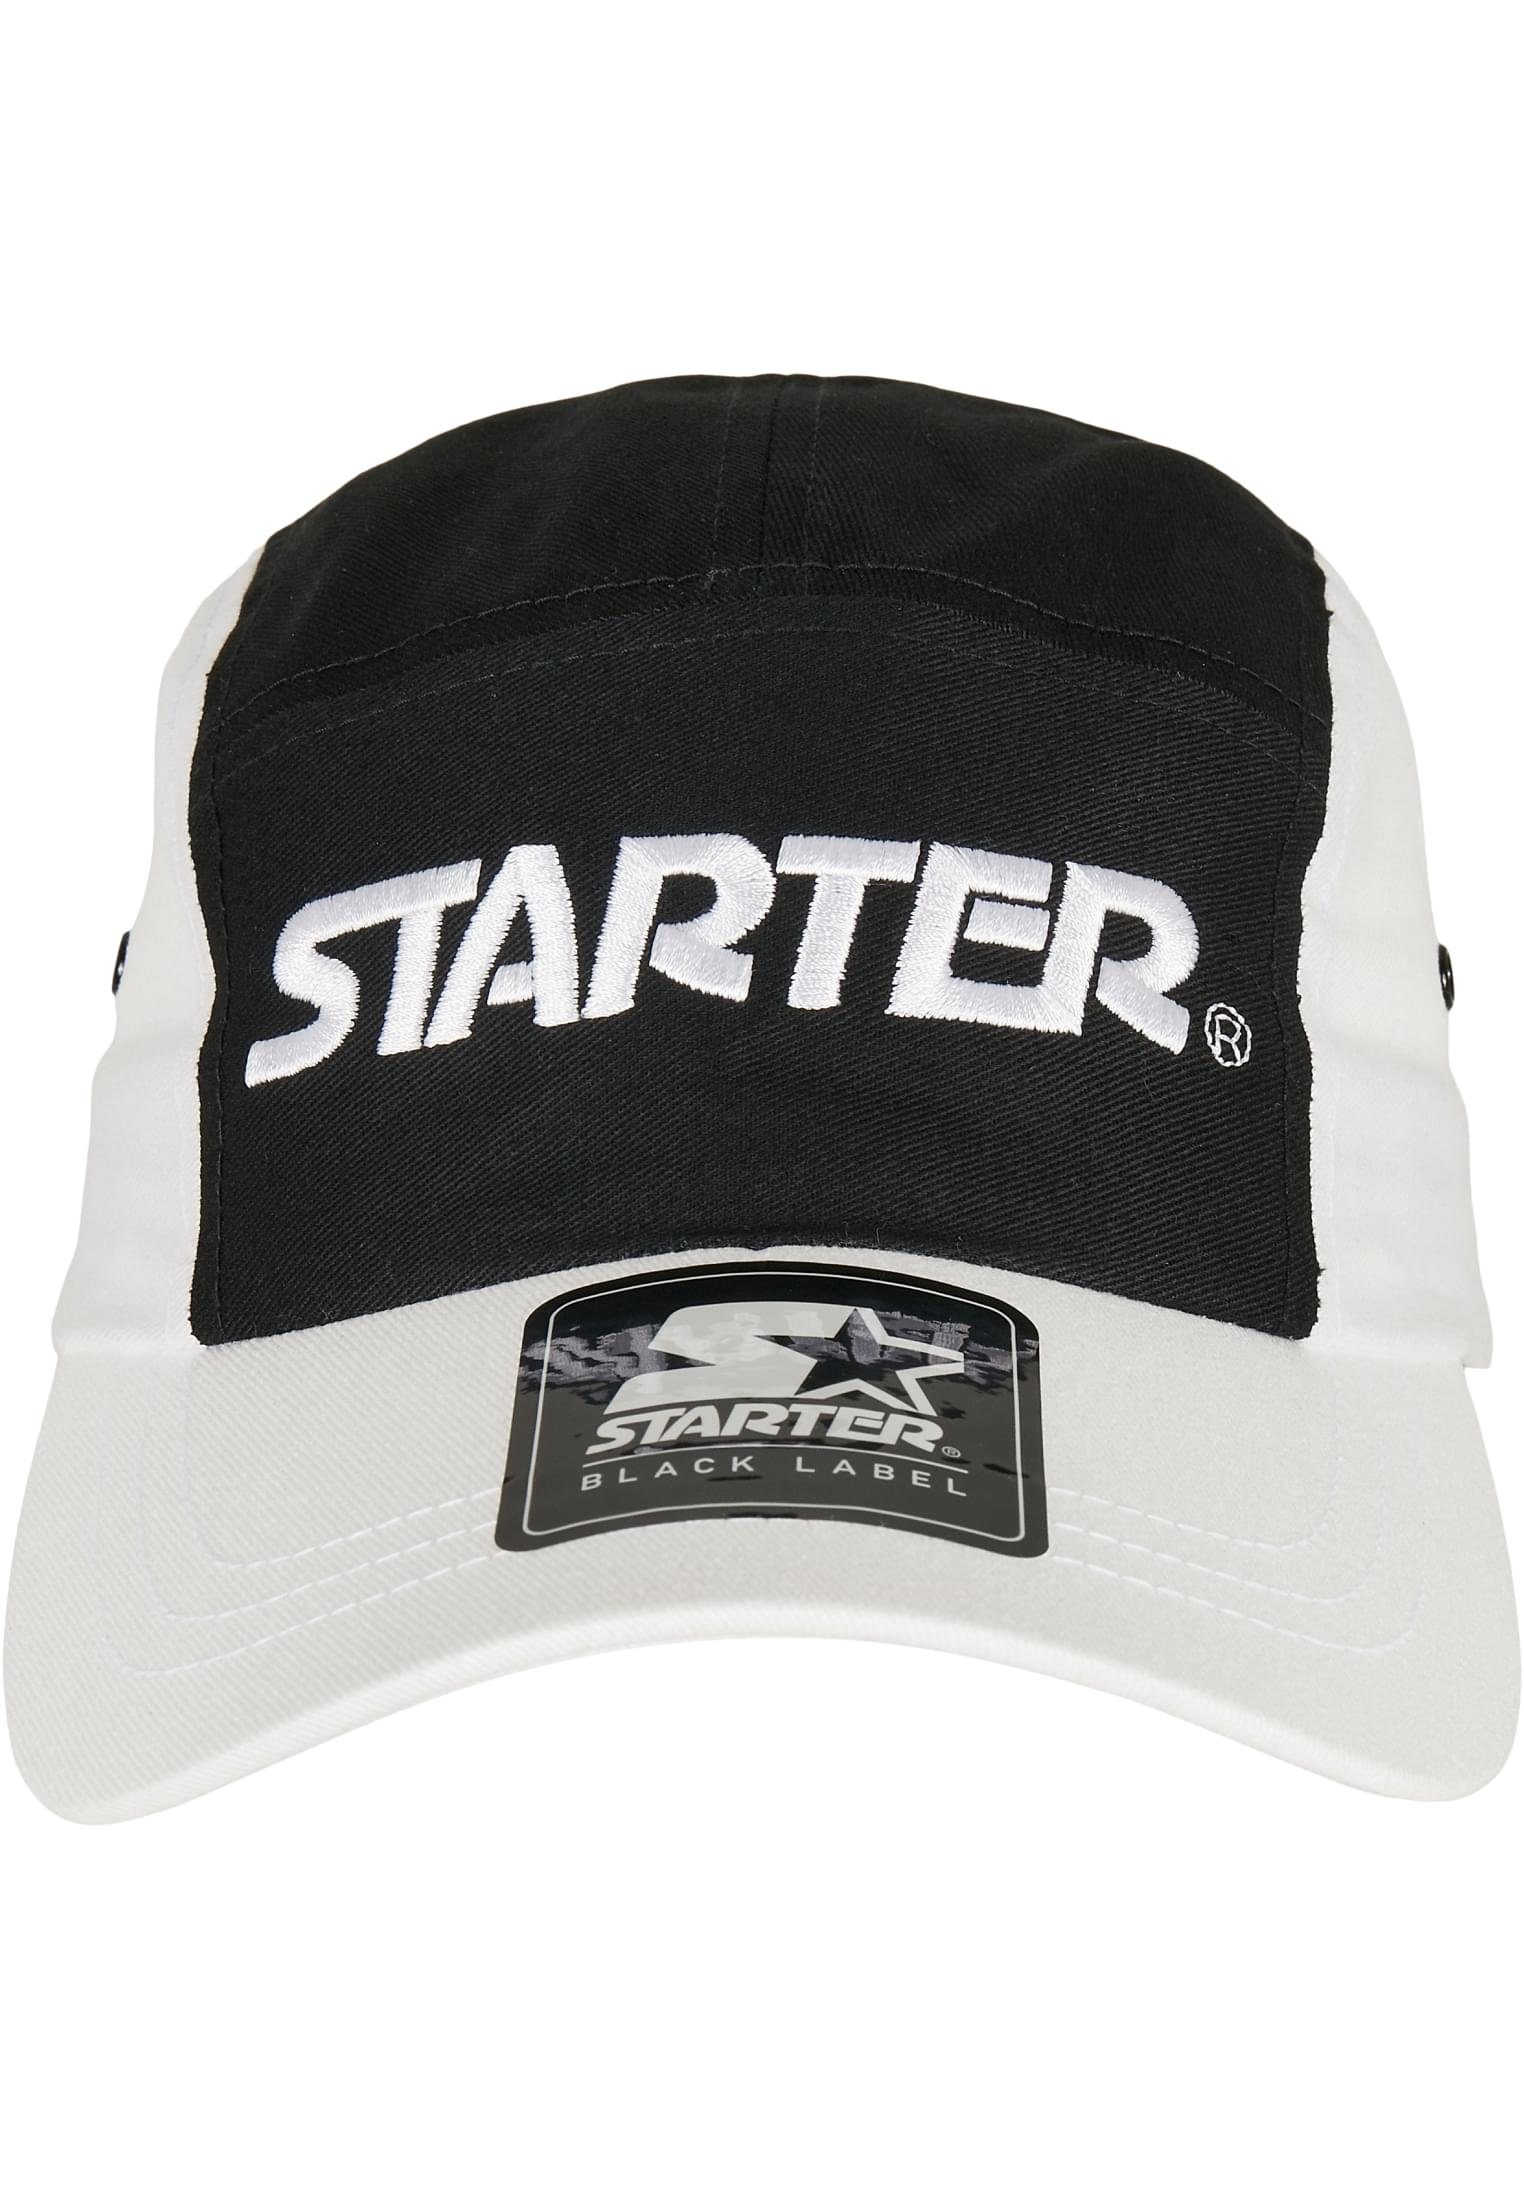 Starter Black Label Snapback Cap Accessoires Fresh Jockey Cap black/white